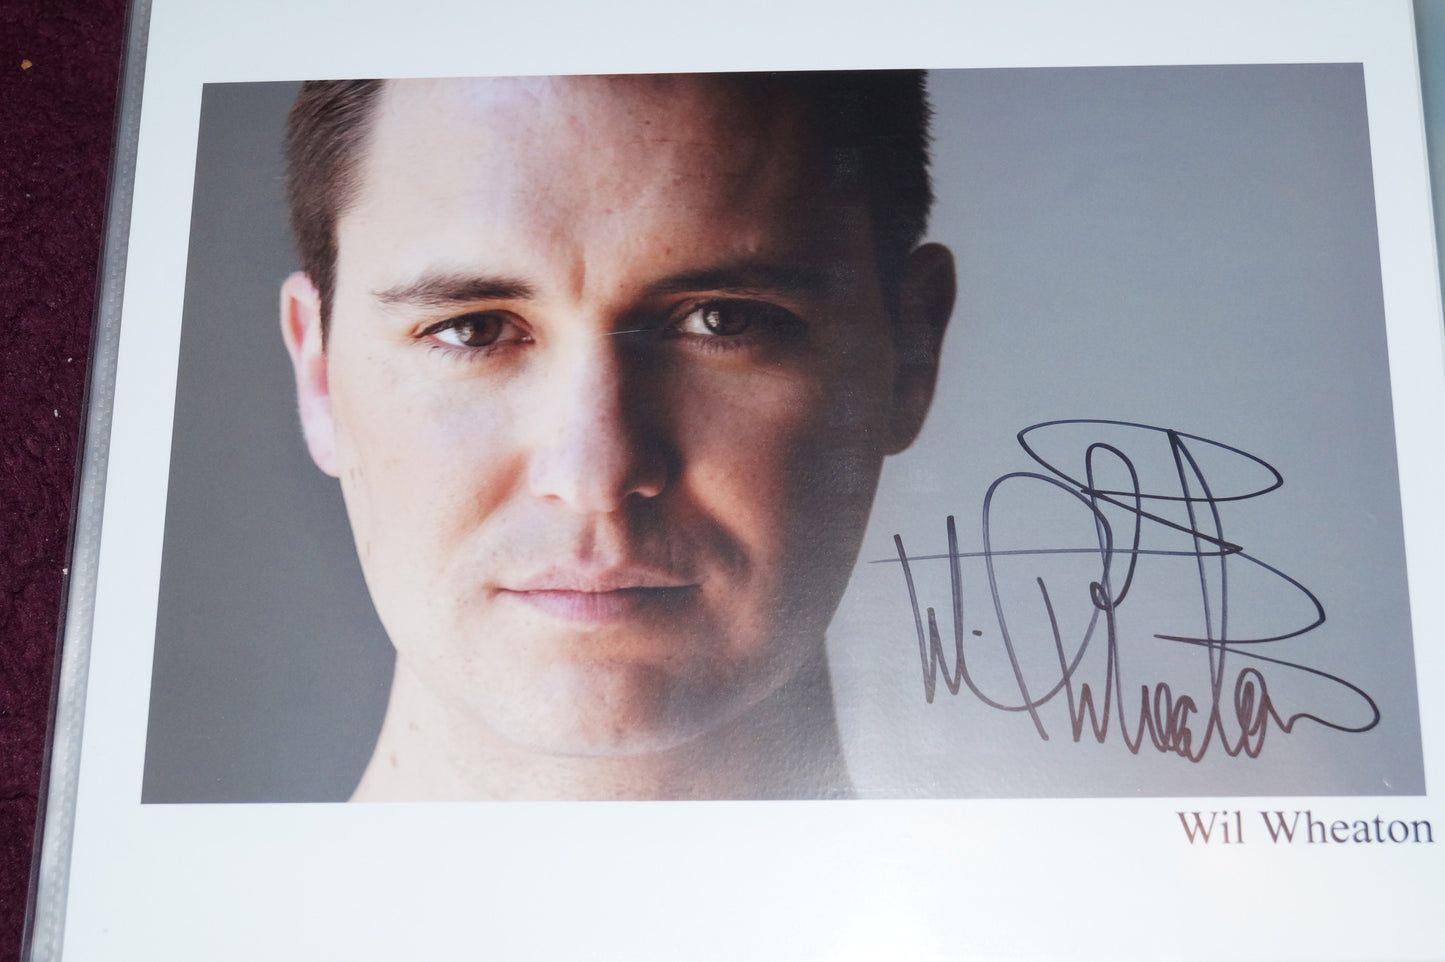 Autographed Photo "Will Wheaton"